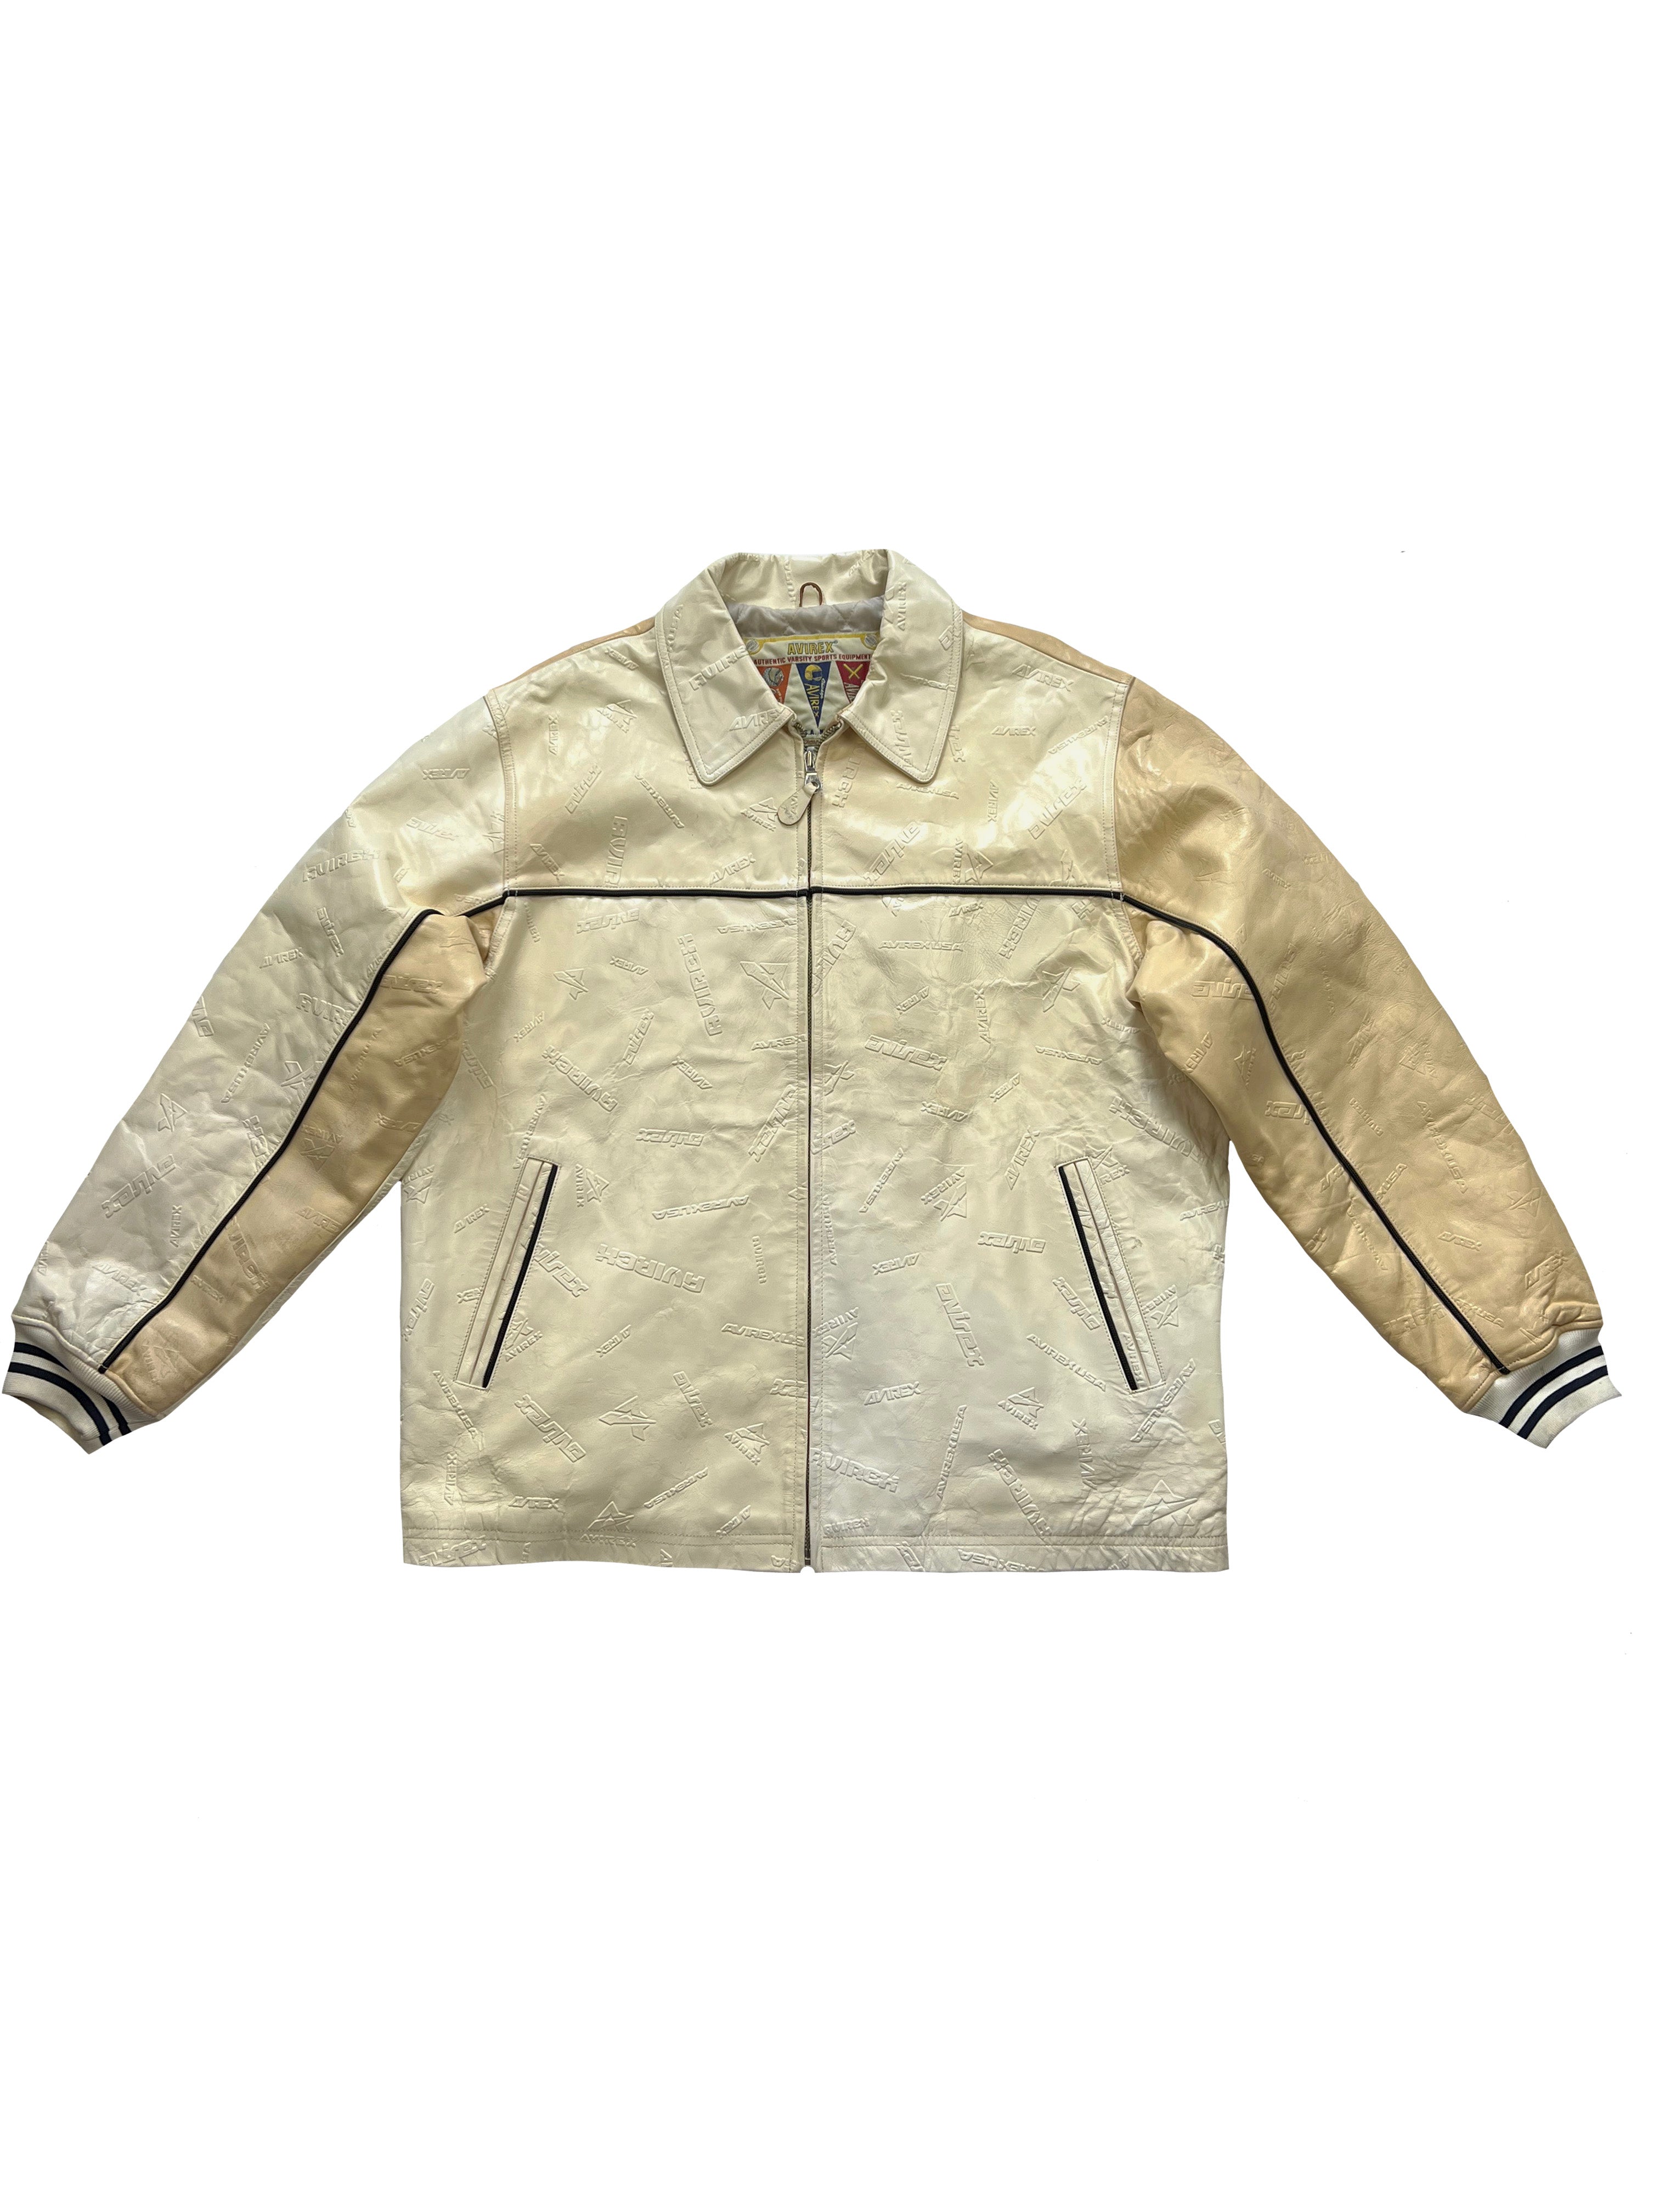 Avirex Beige Embossed Leather Jacket 90's